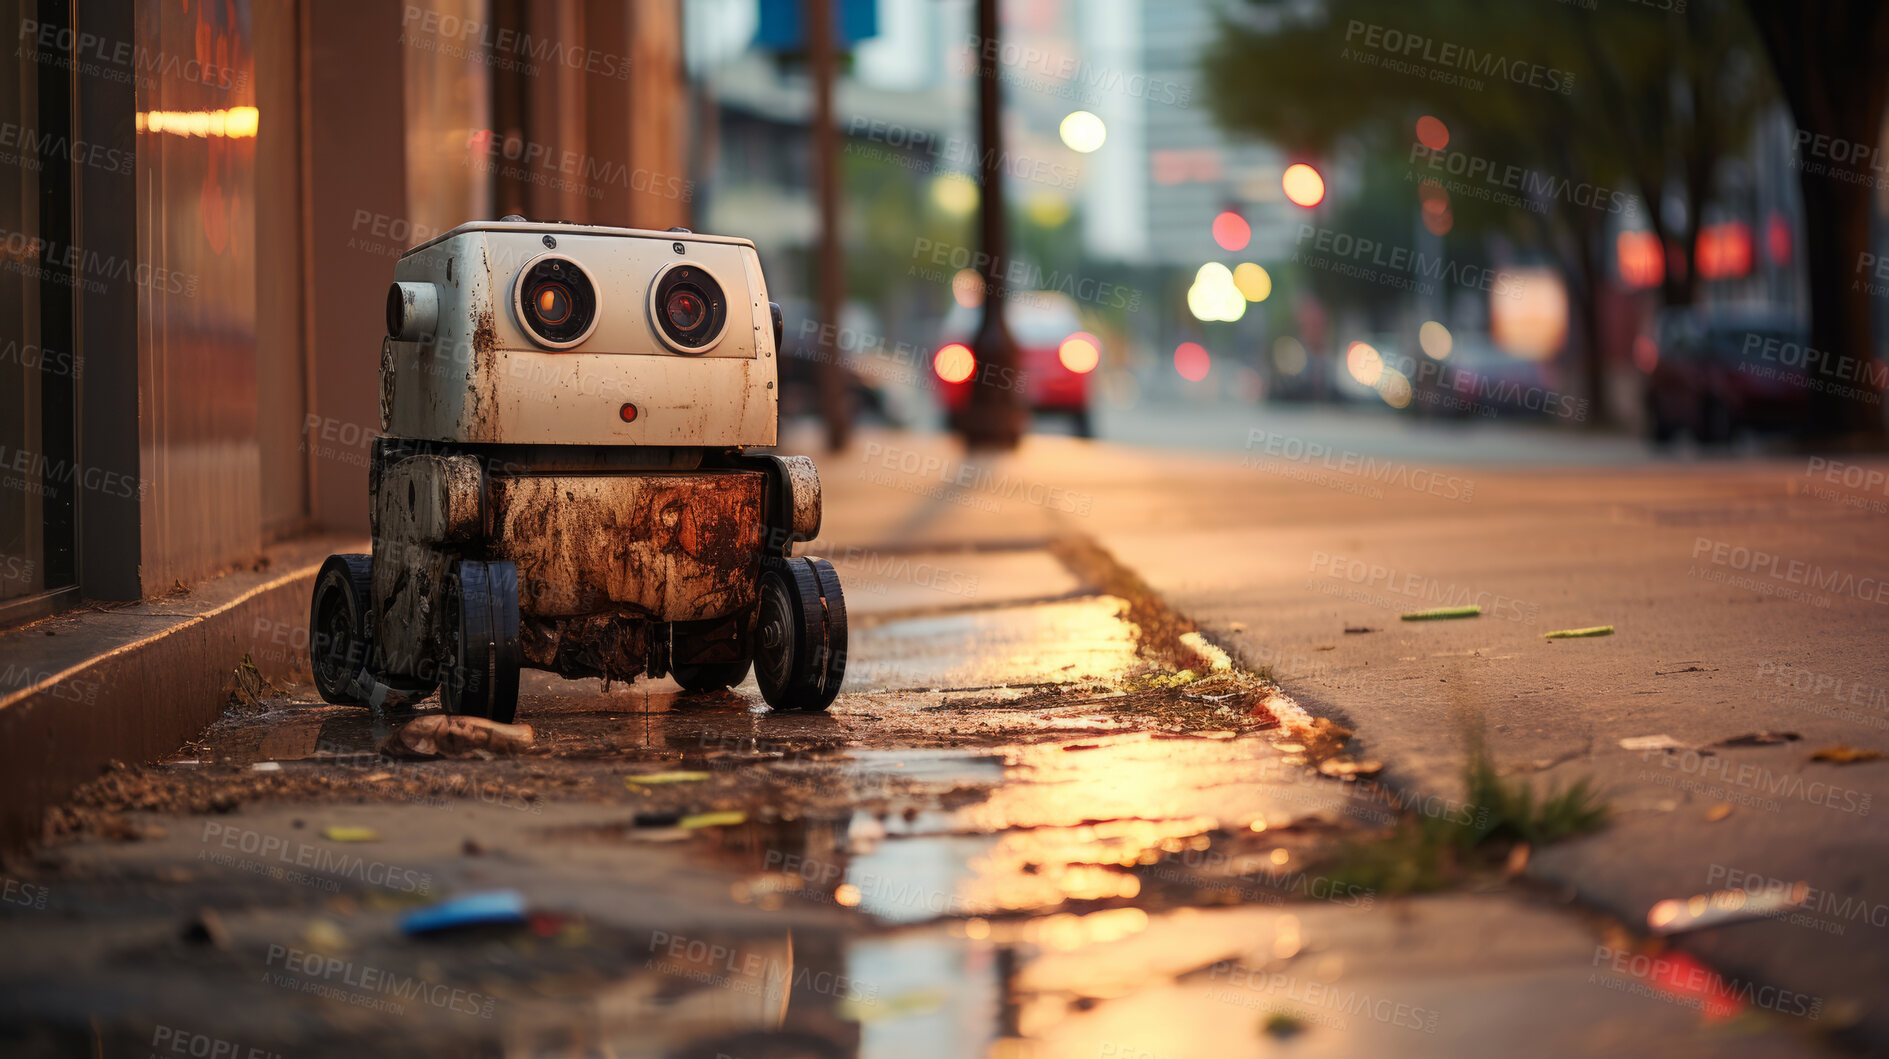 Buy stock photo Portrait of rusty vintage robot in street. Photo-realistic urban scenes.